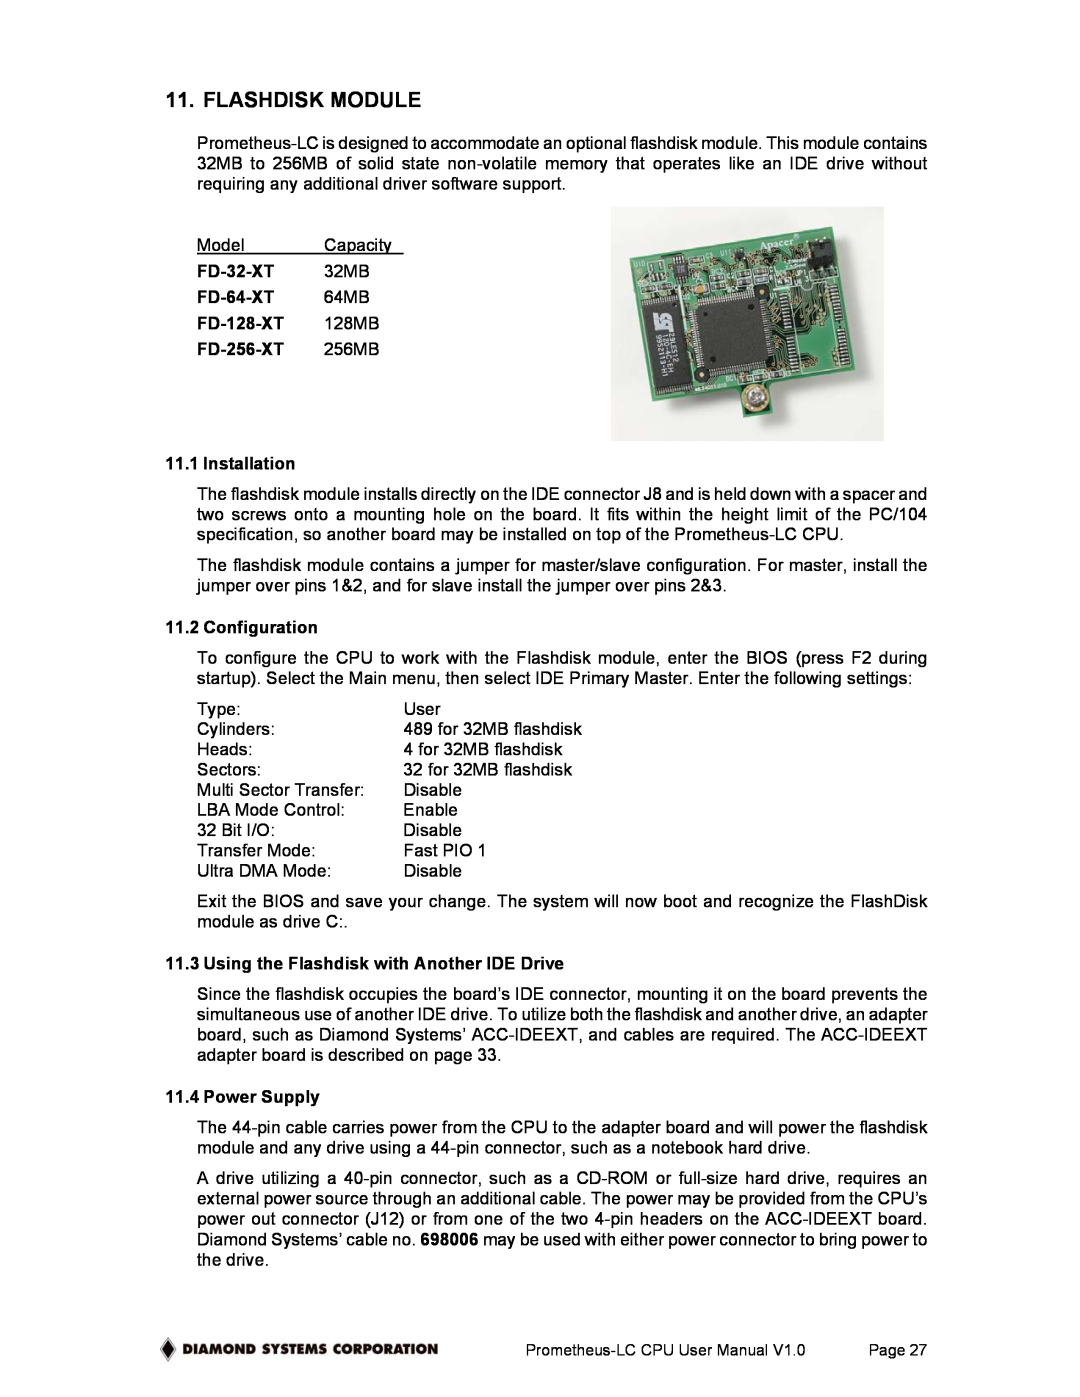 Diamond Systems Low-Power PC/104 CPU Board With ZFx86 Processor user manual Flashdisk Module, Installation, Configuration 